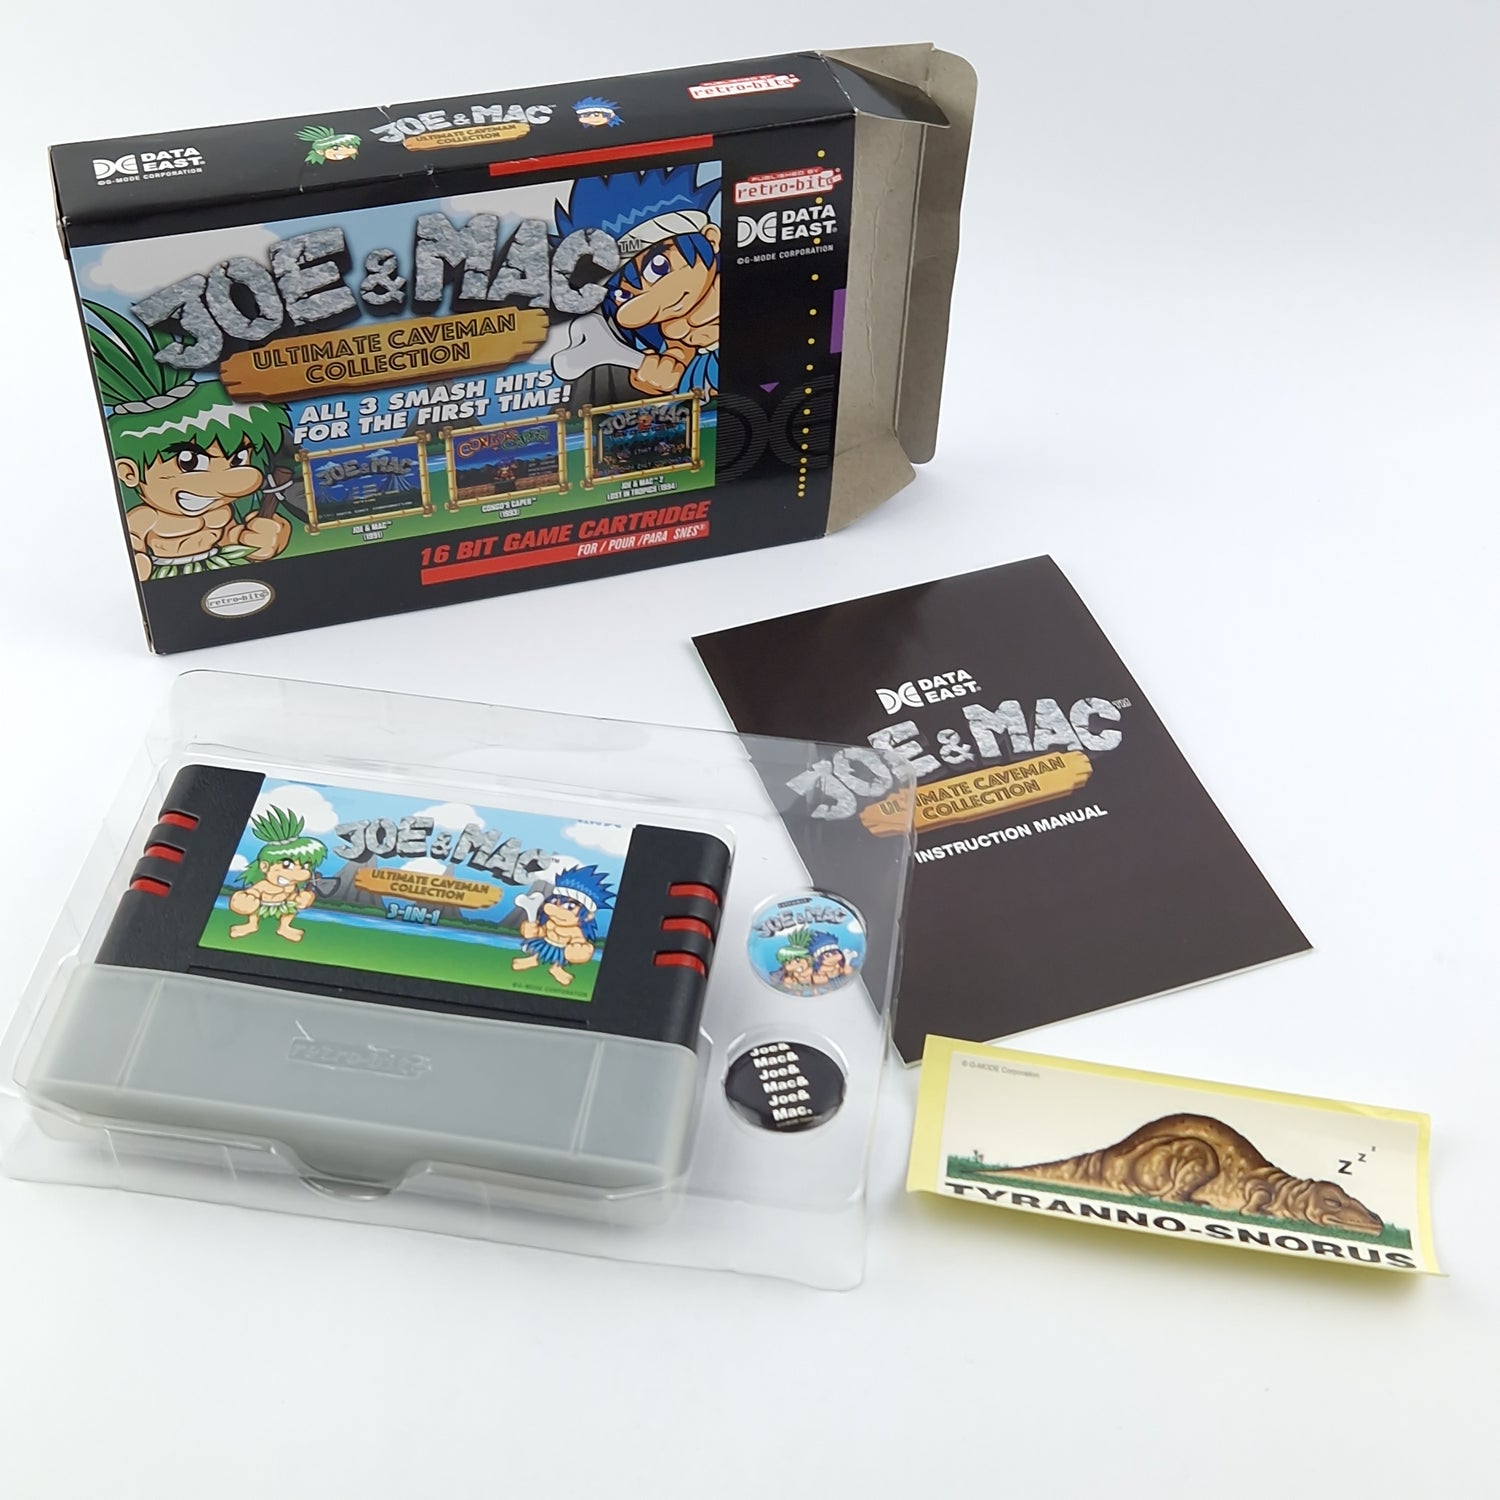 Super Nintendo Game : Joe & Mac Ultimate Caveman Collection - Retro Bit Snes